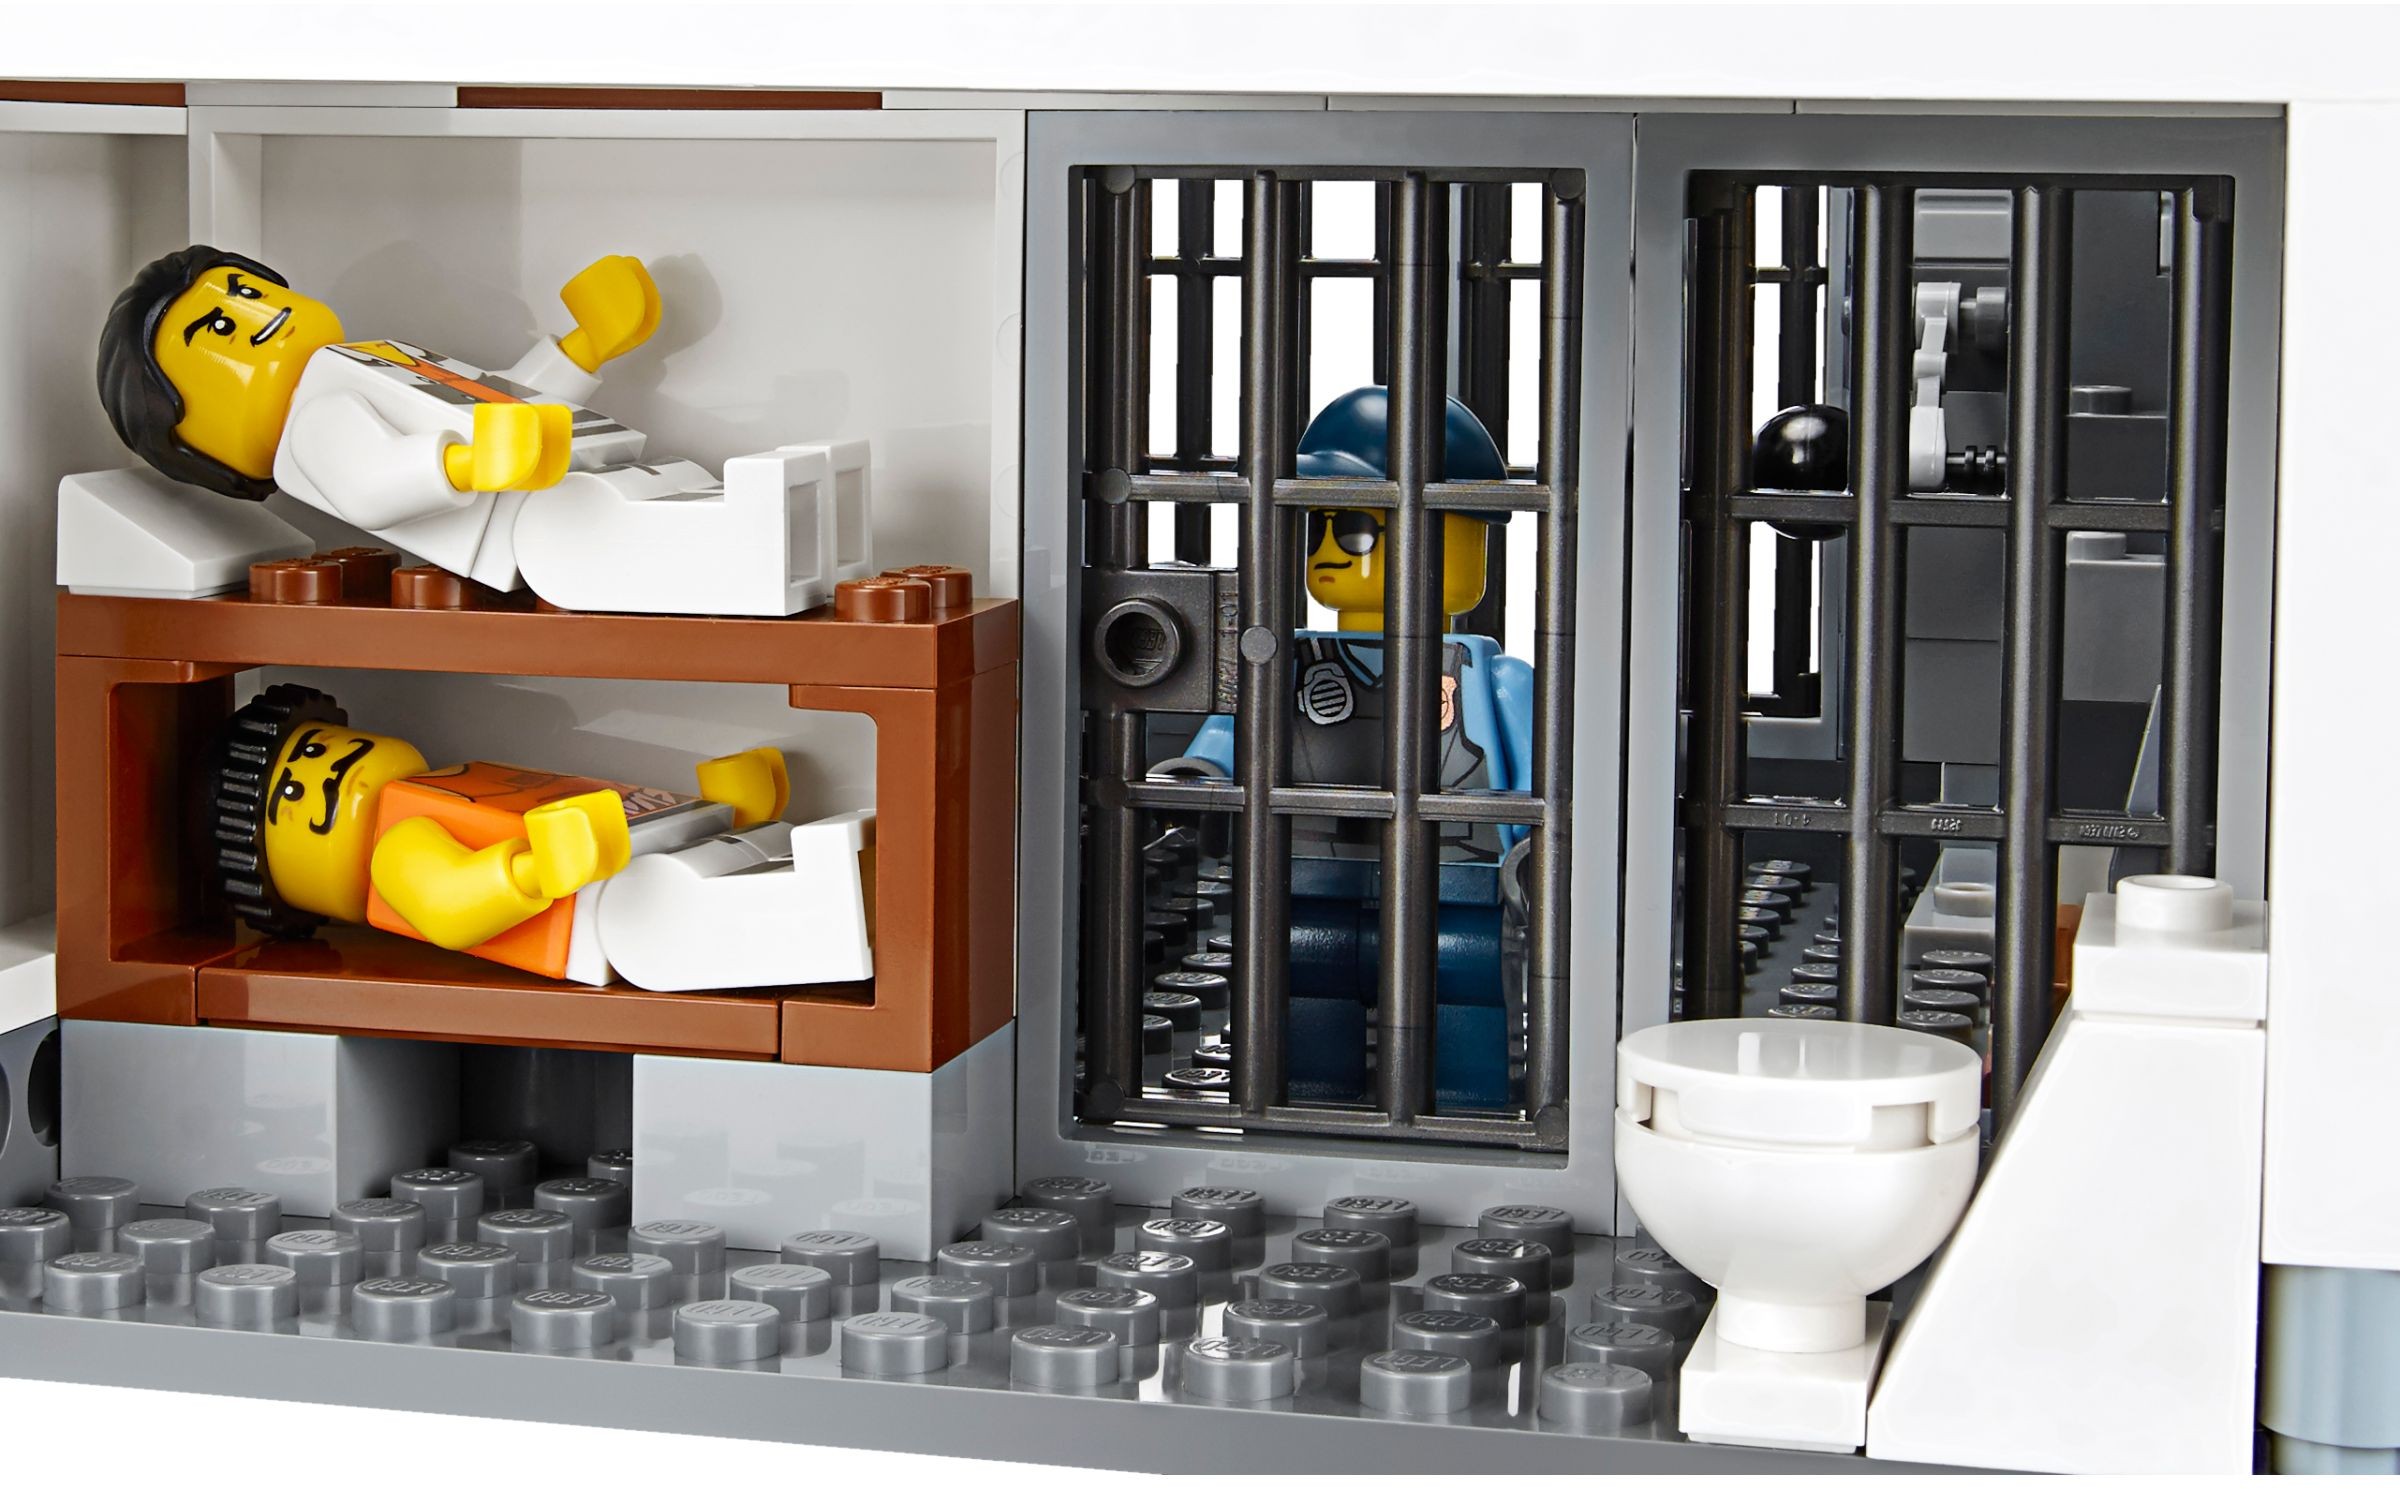 LEGO City 2016 Prison Island 60130 Set Photos Preview! - Bricks and Bloks